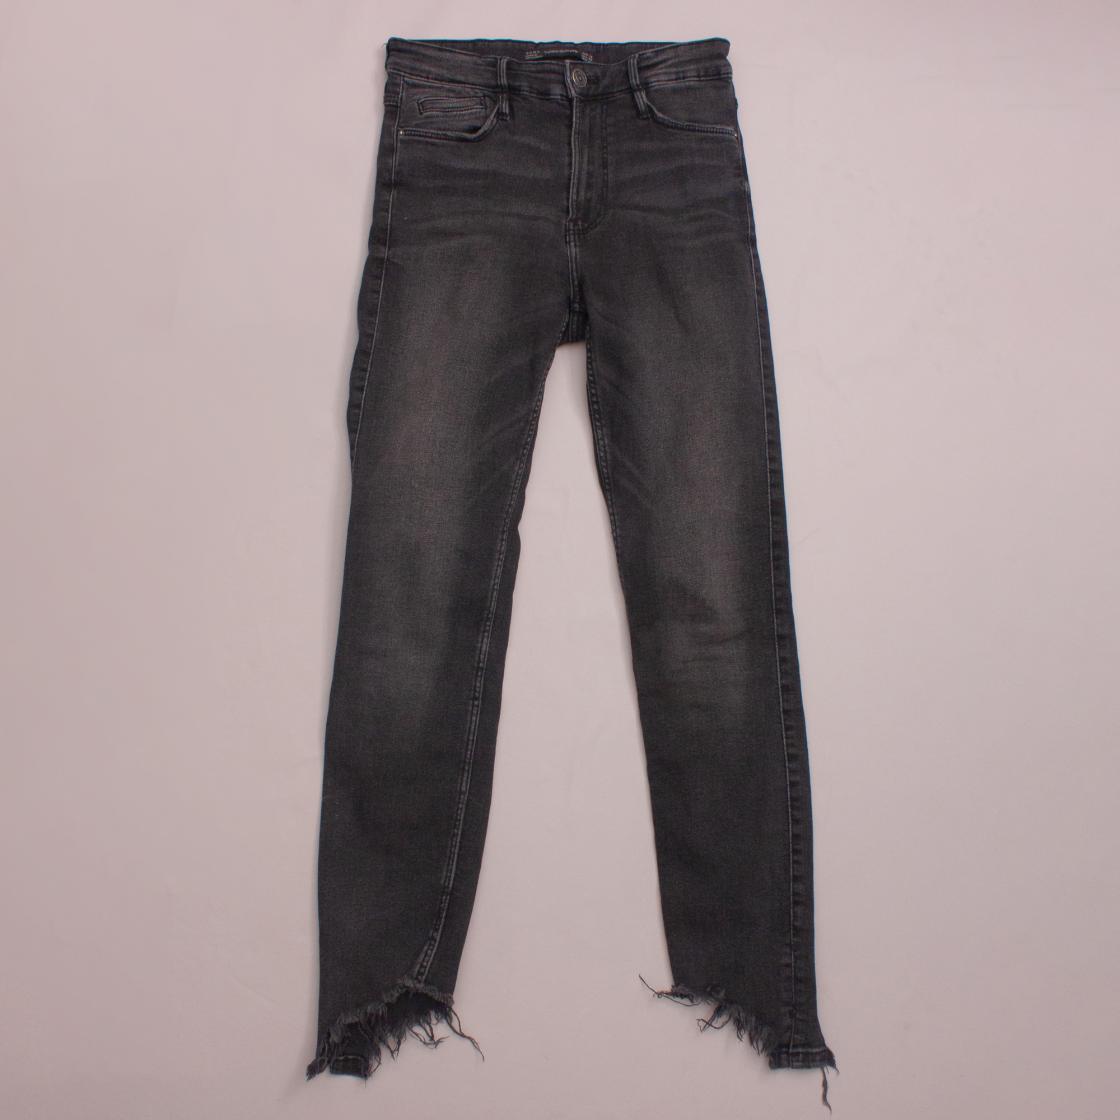 Zara Distressed Skinny Jeans